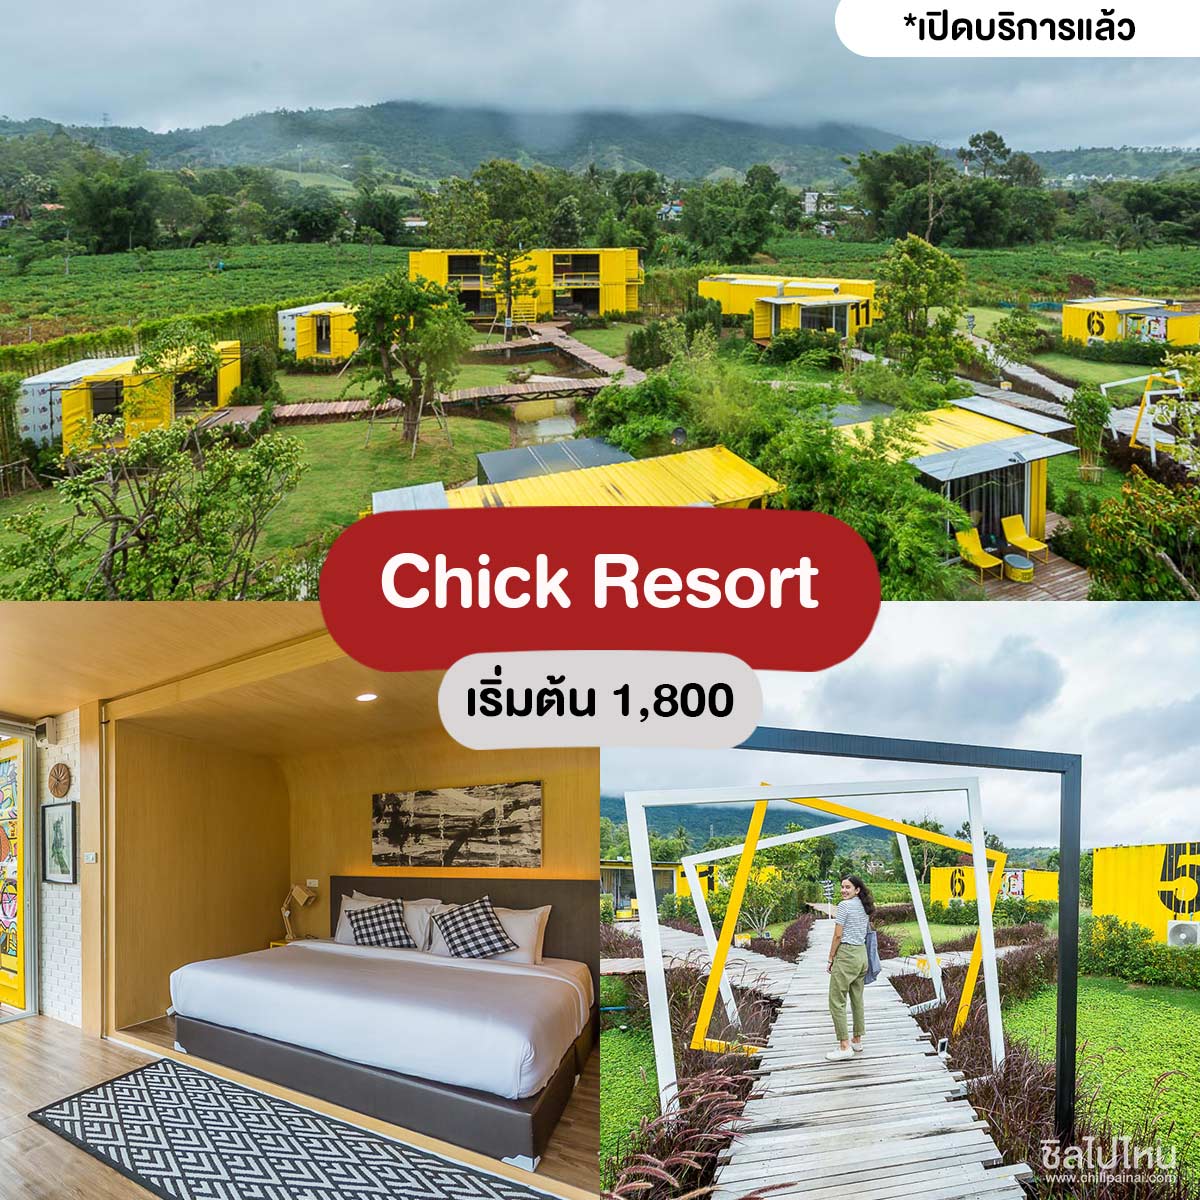 Chick Resort - ที่พักเขาค้อ 